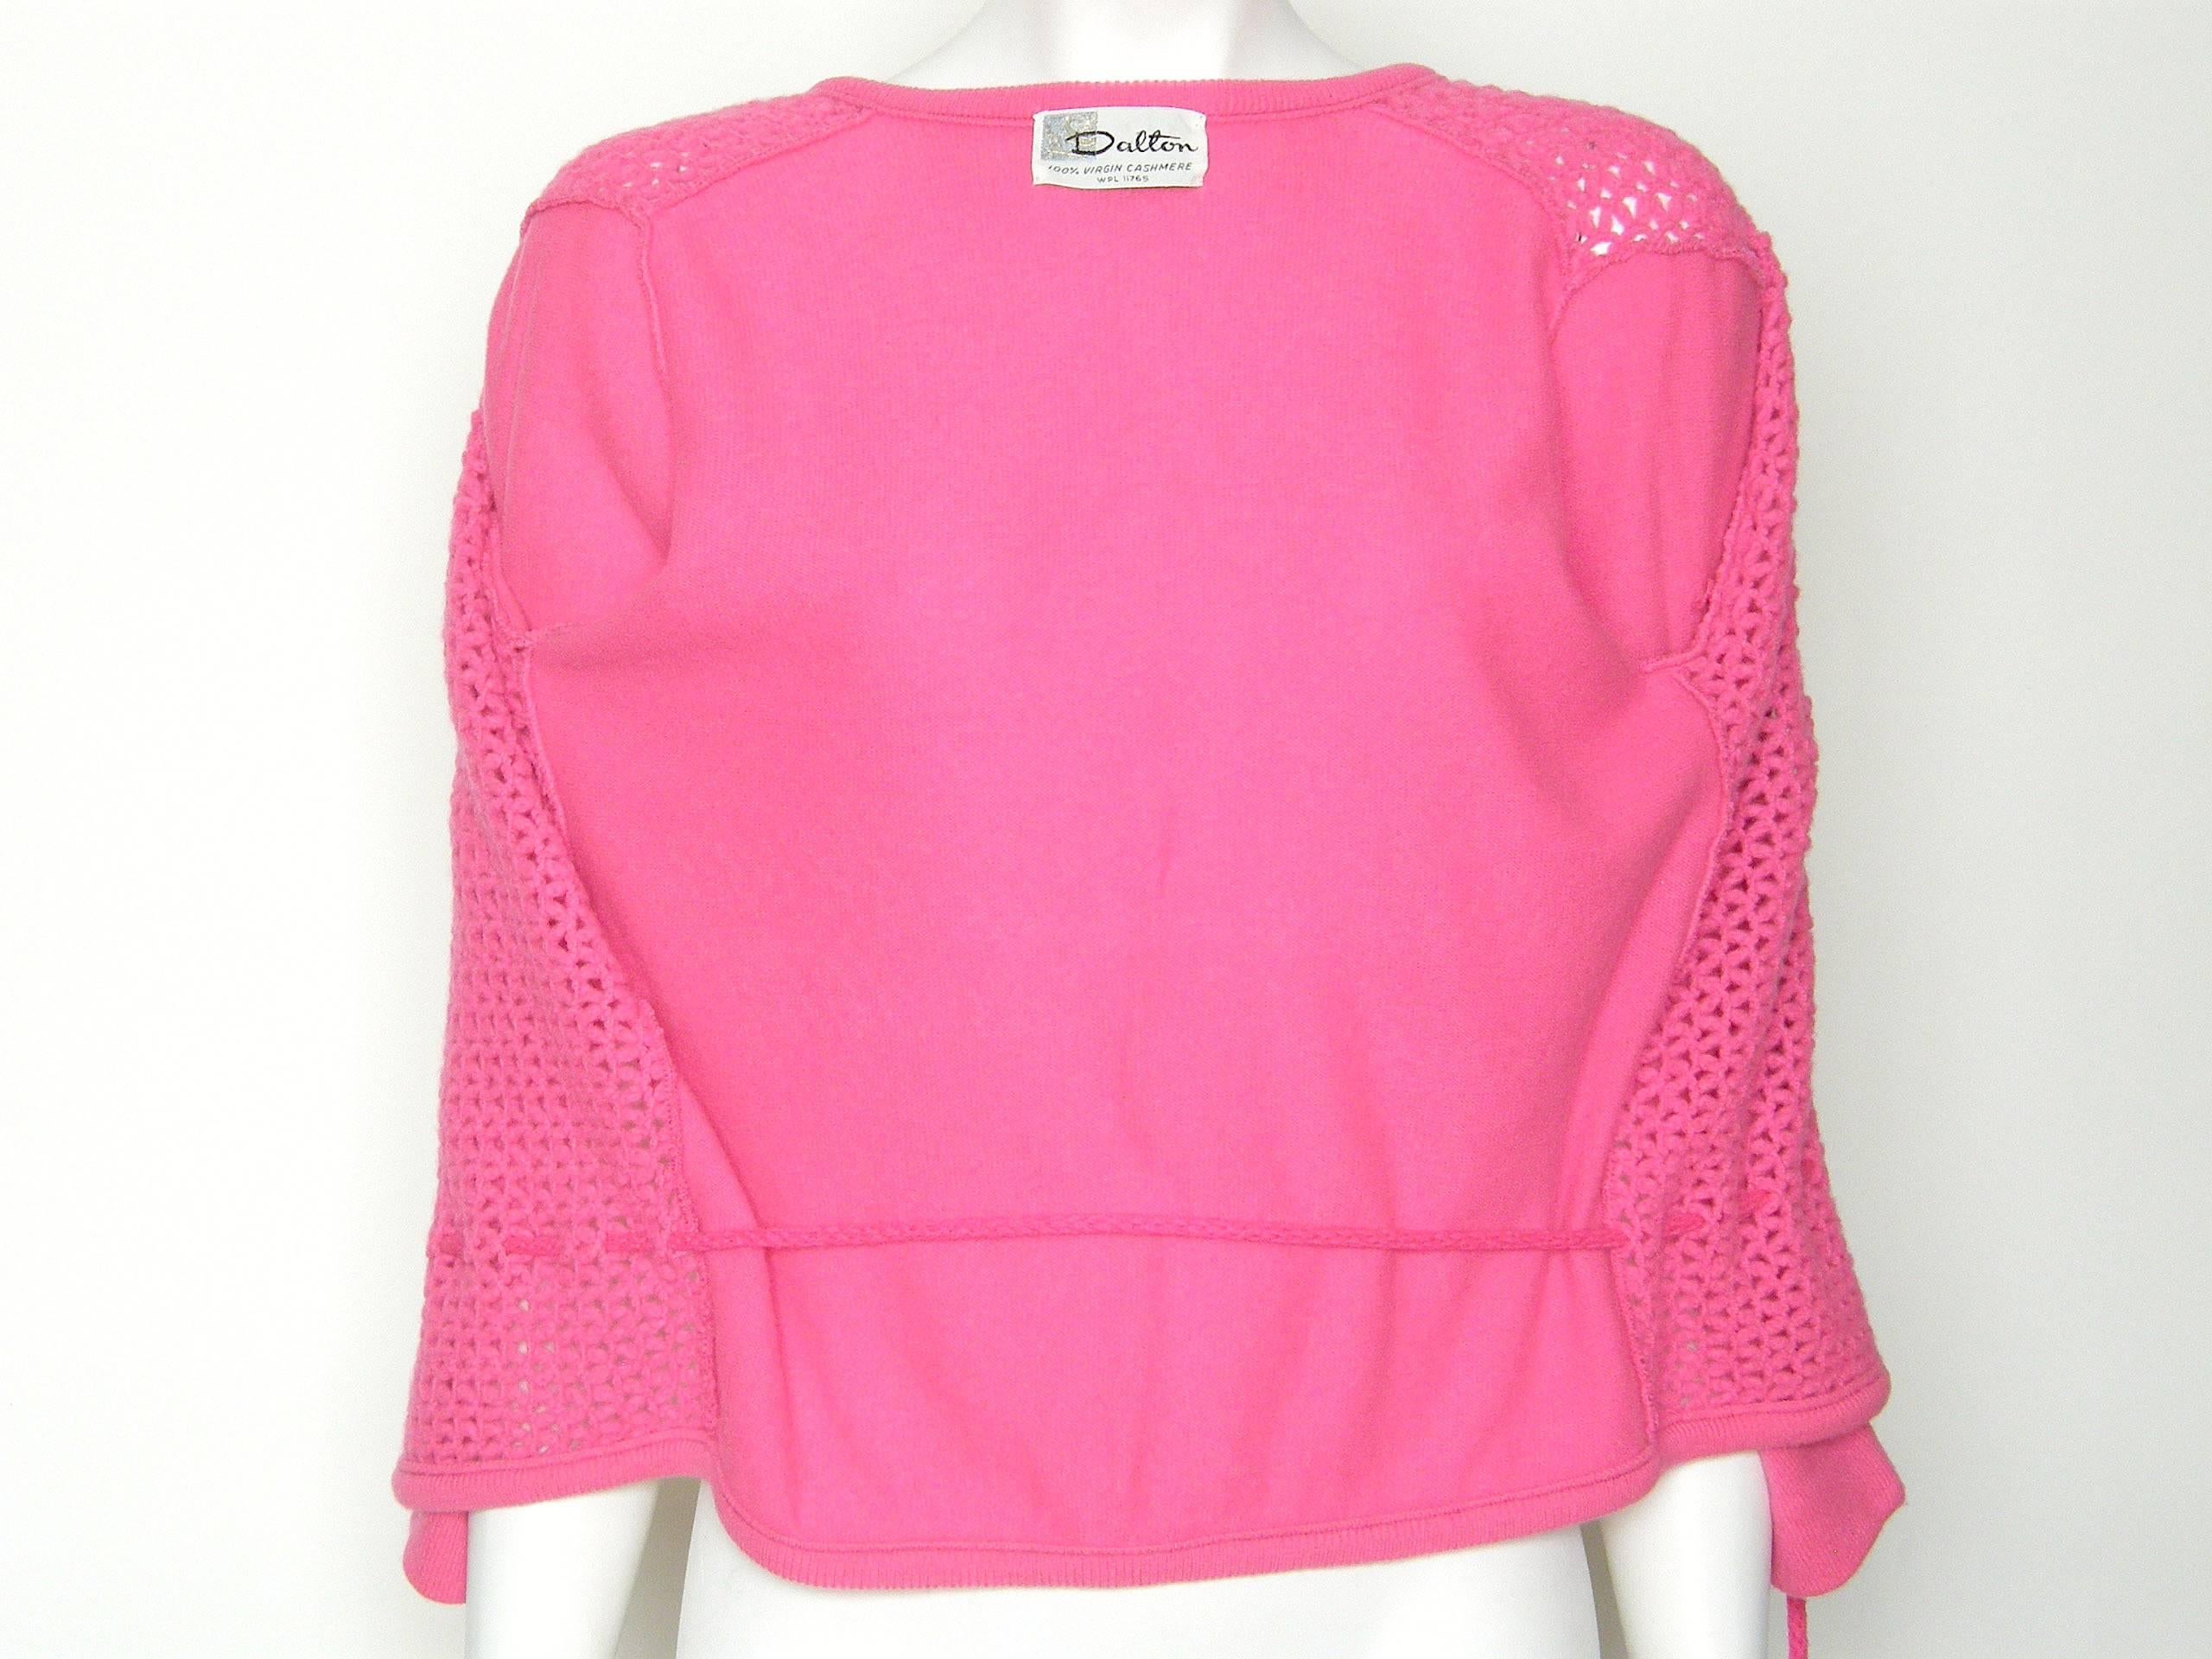 Dalton Shocking Pink Cashmere Cardigan Fishnet Sweater with Waist Tie For Sale 1